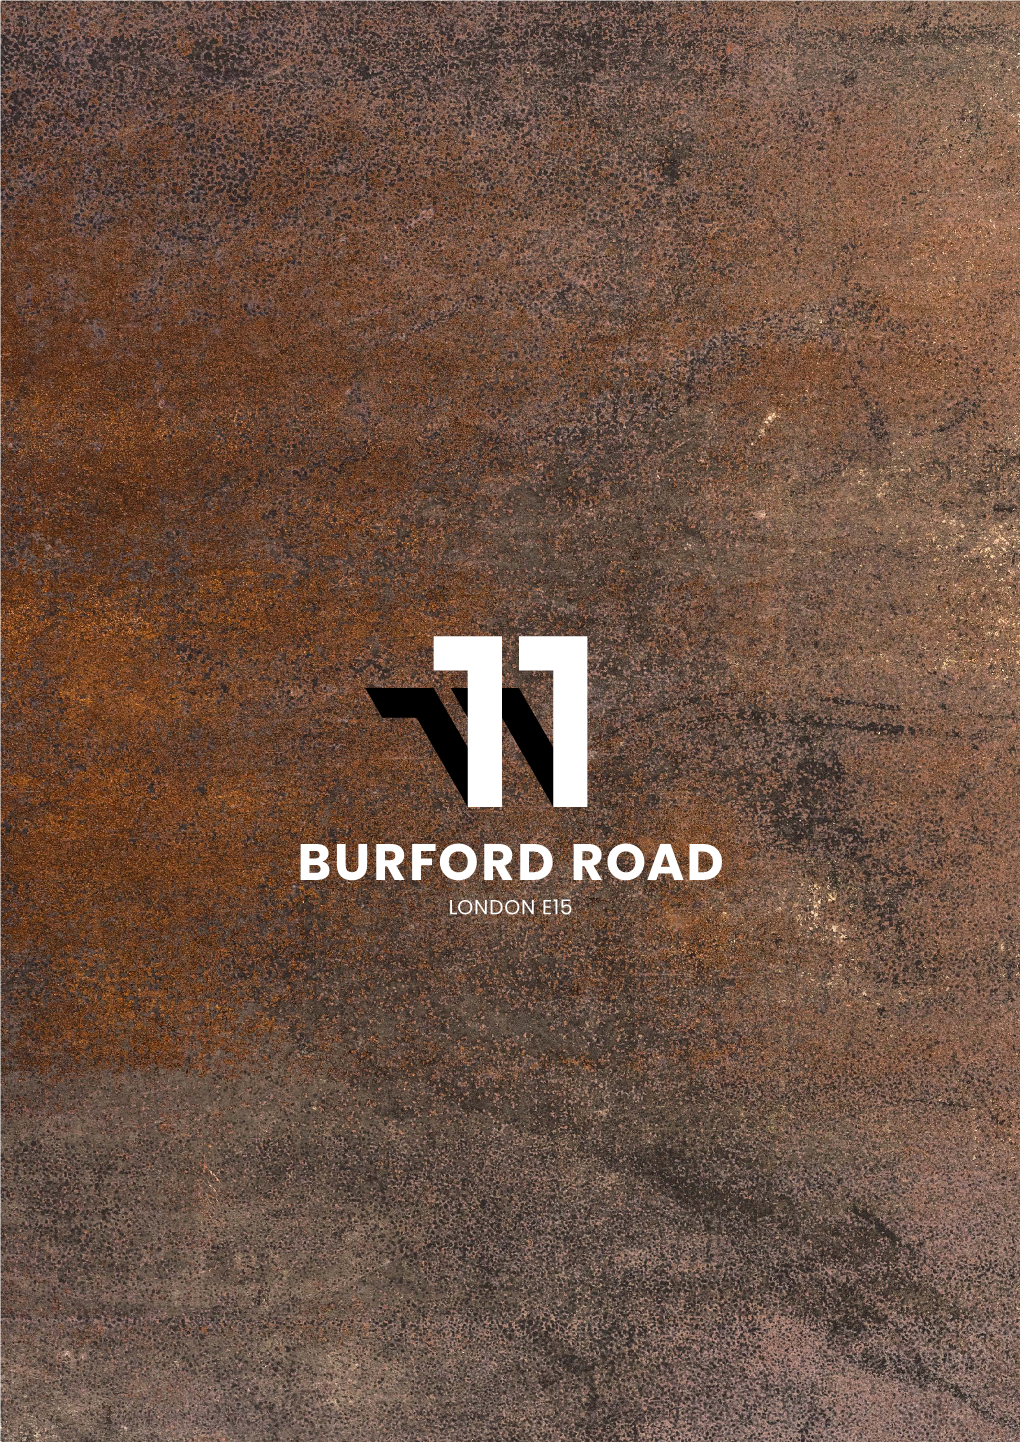 BURFORD ROAD LONDON E15 Investment 11 Burford Road 2 Highlights 11 Burford Road 3